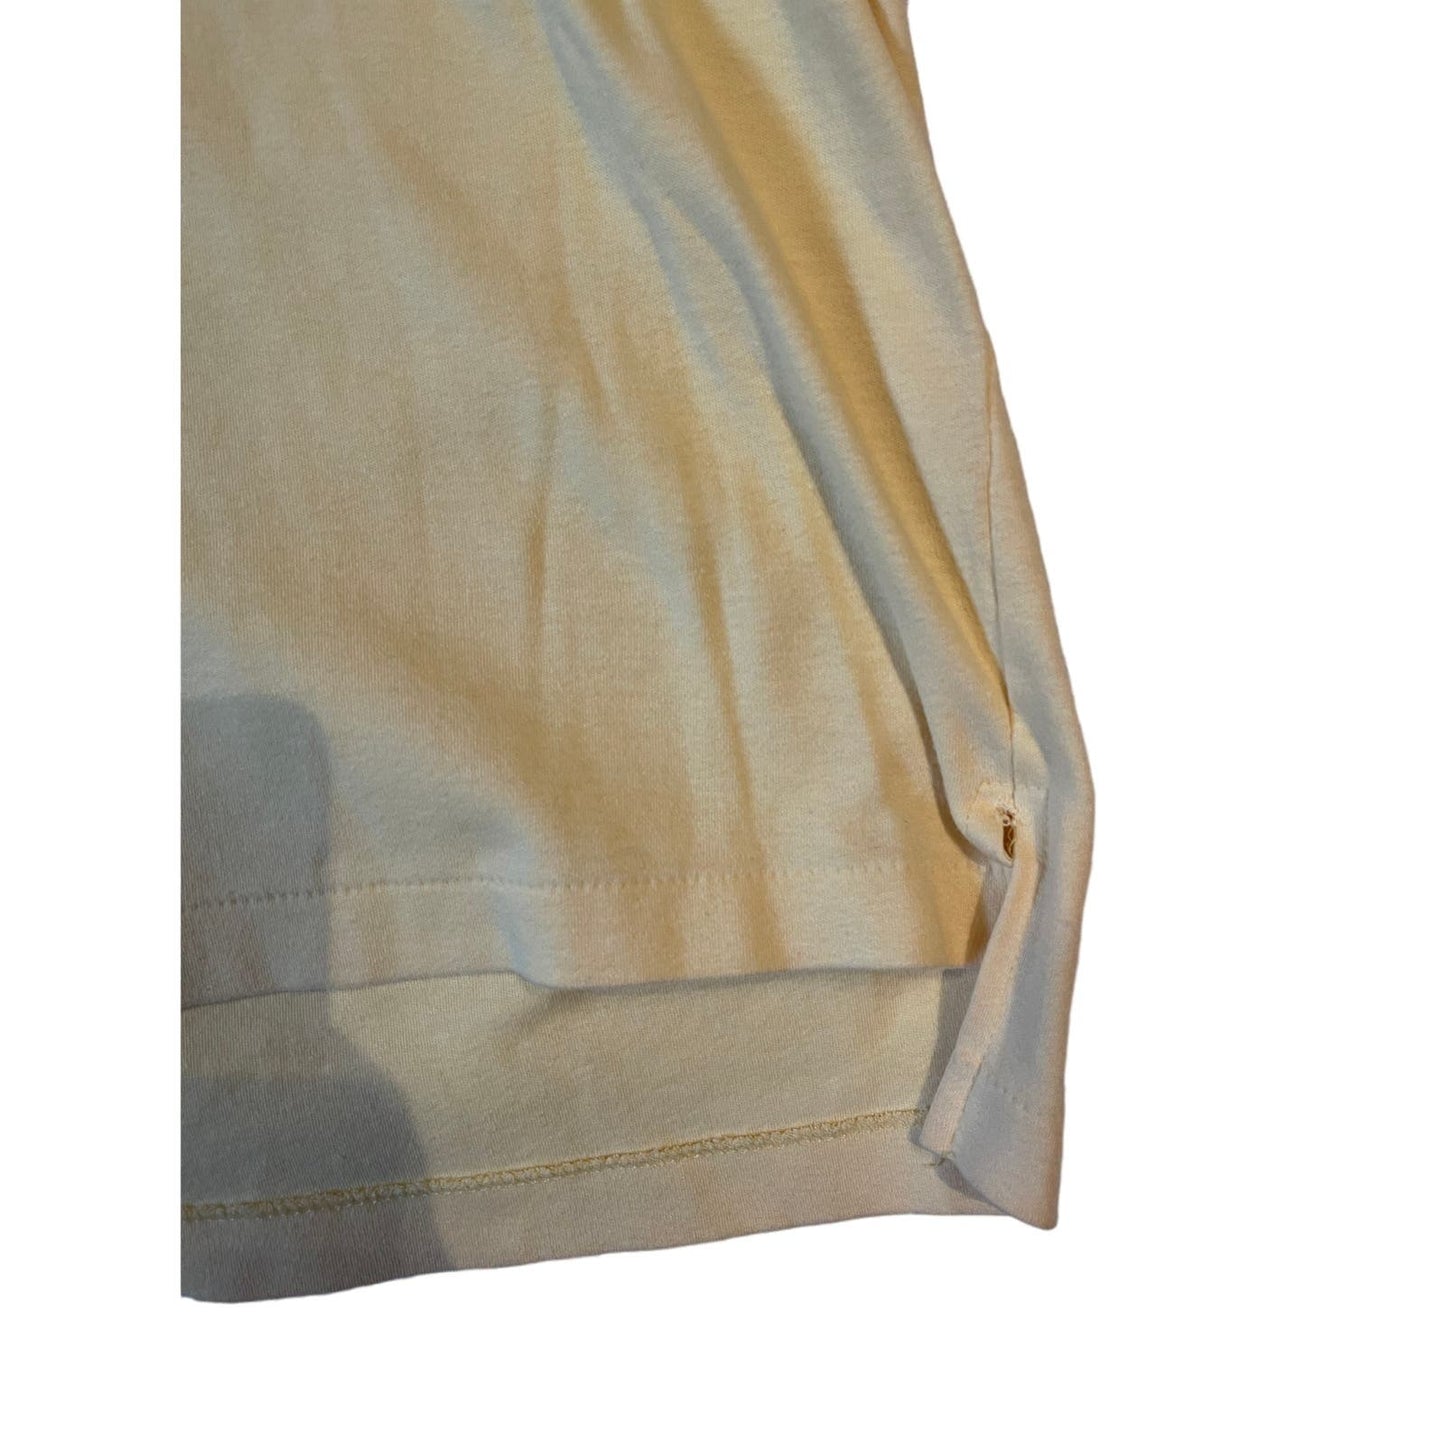 Vintage 90s Studio Chesterfield 100% Cotton Yellow Polo Shirt Men's Size Large